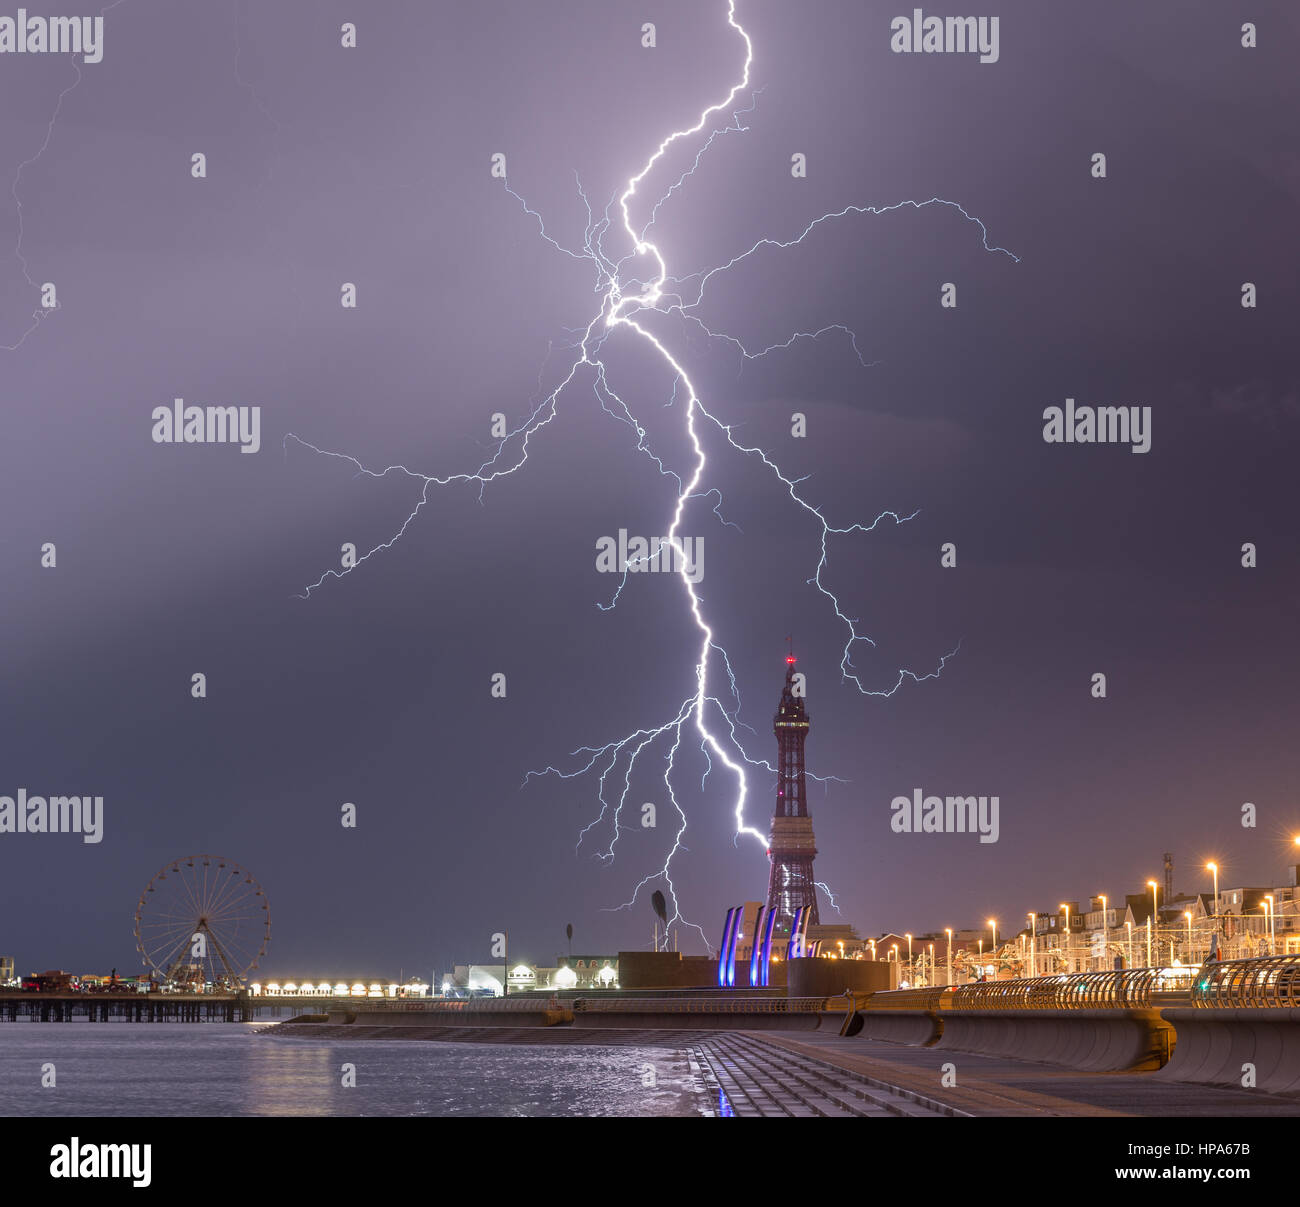 Lightning storm over Blackpool Stock Photo